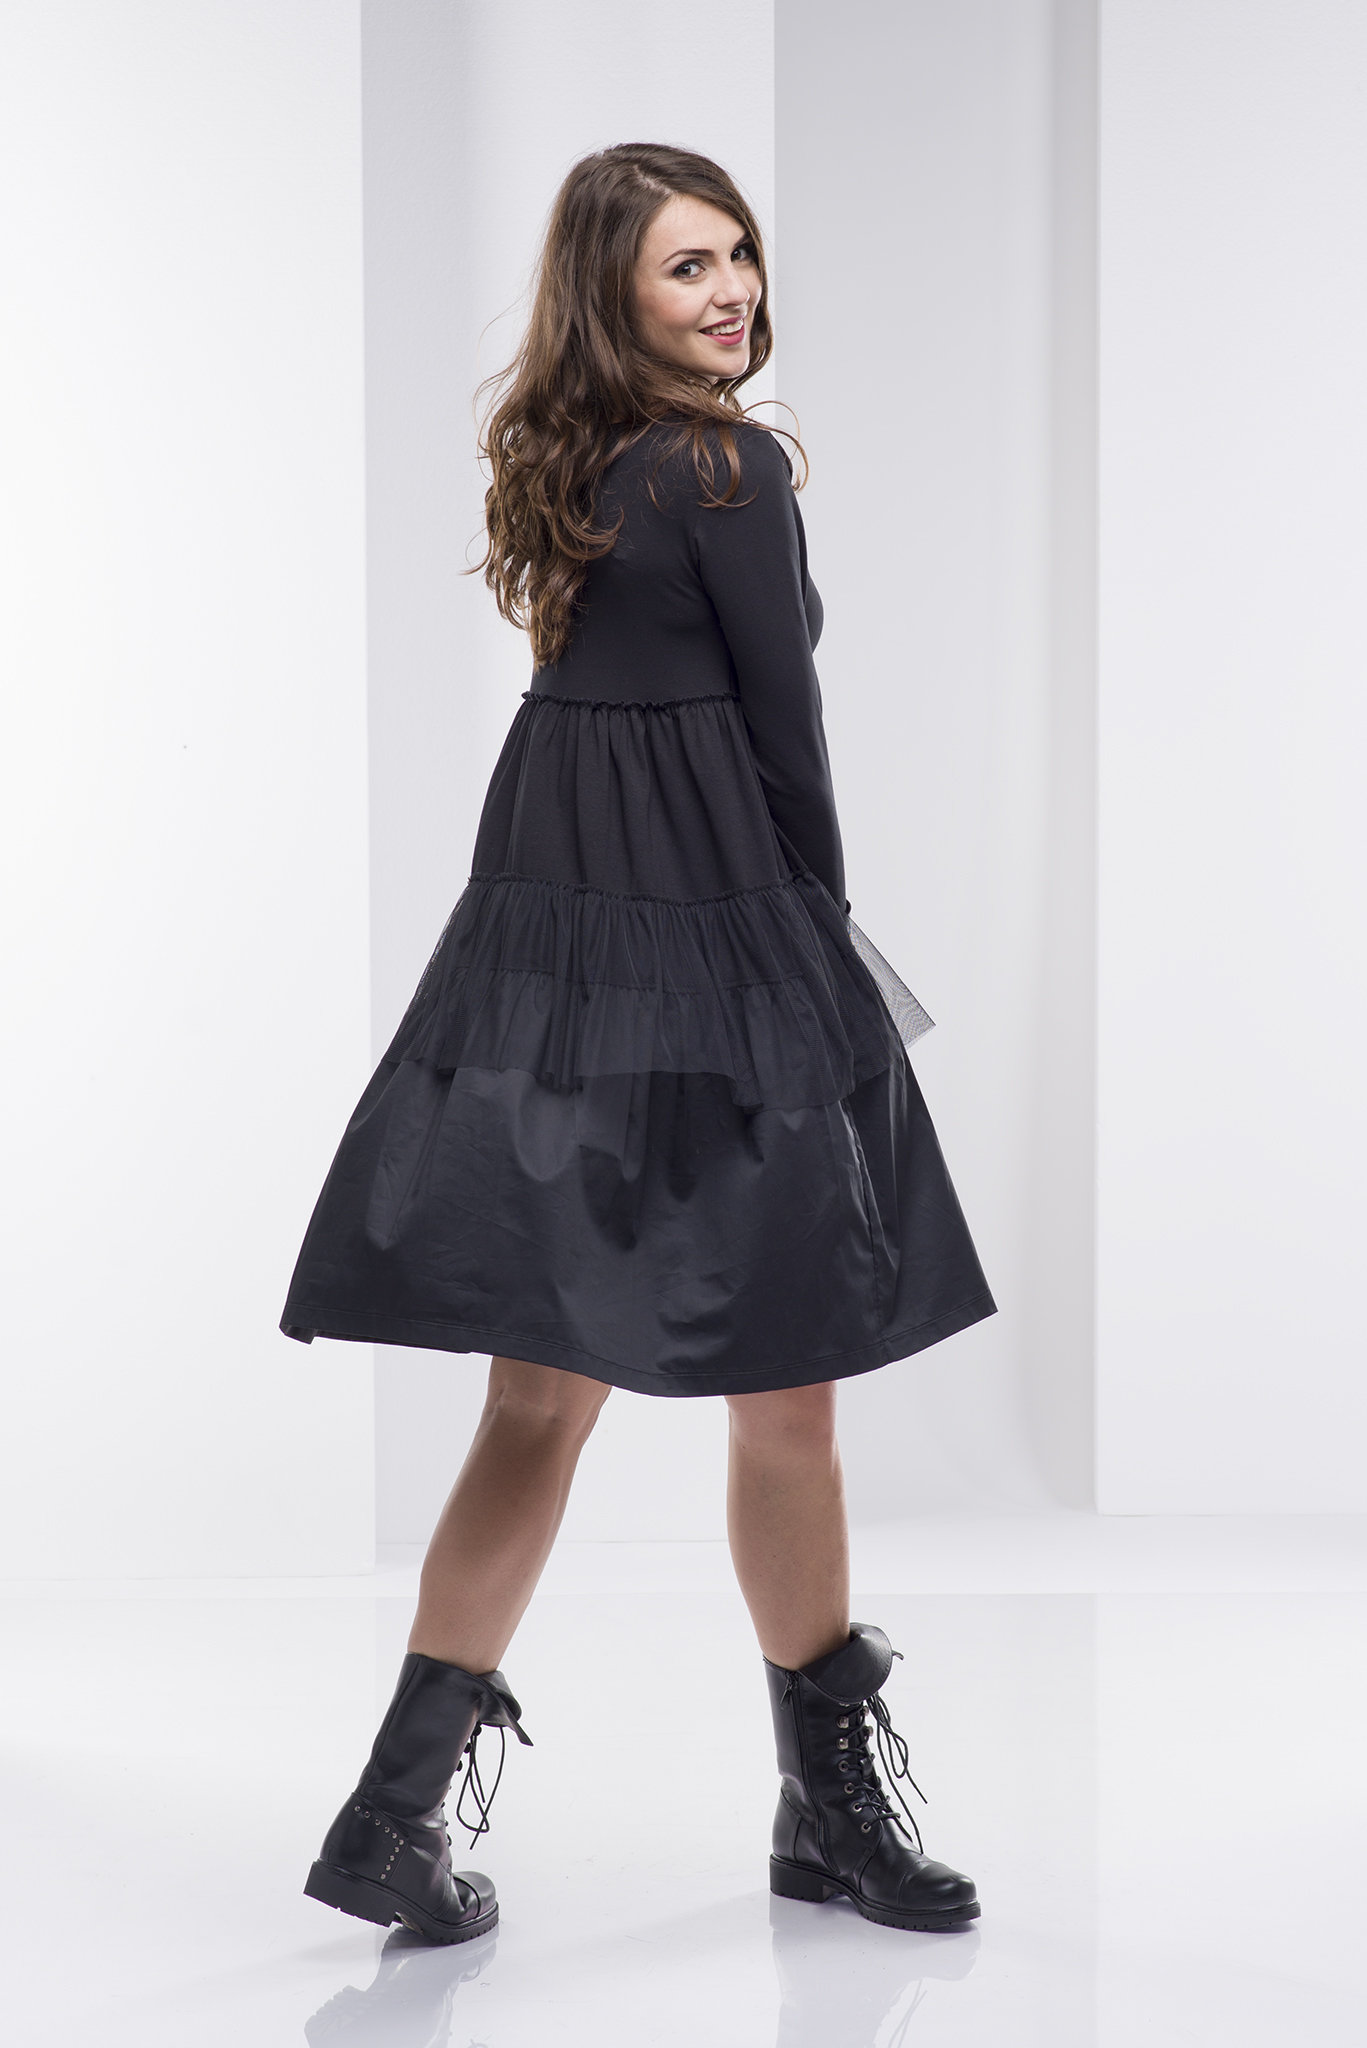 Black Dress Avant Garde Clothing Lolita Dress Gothic Dress